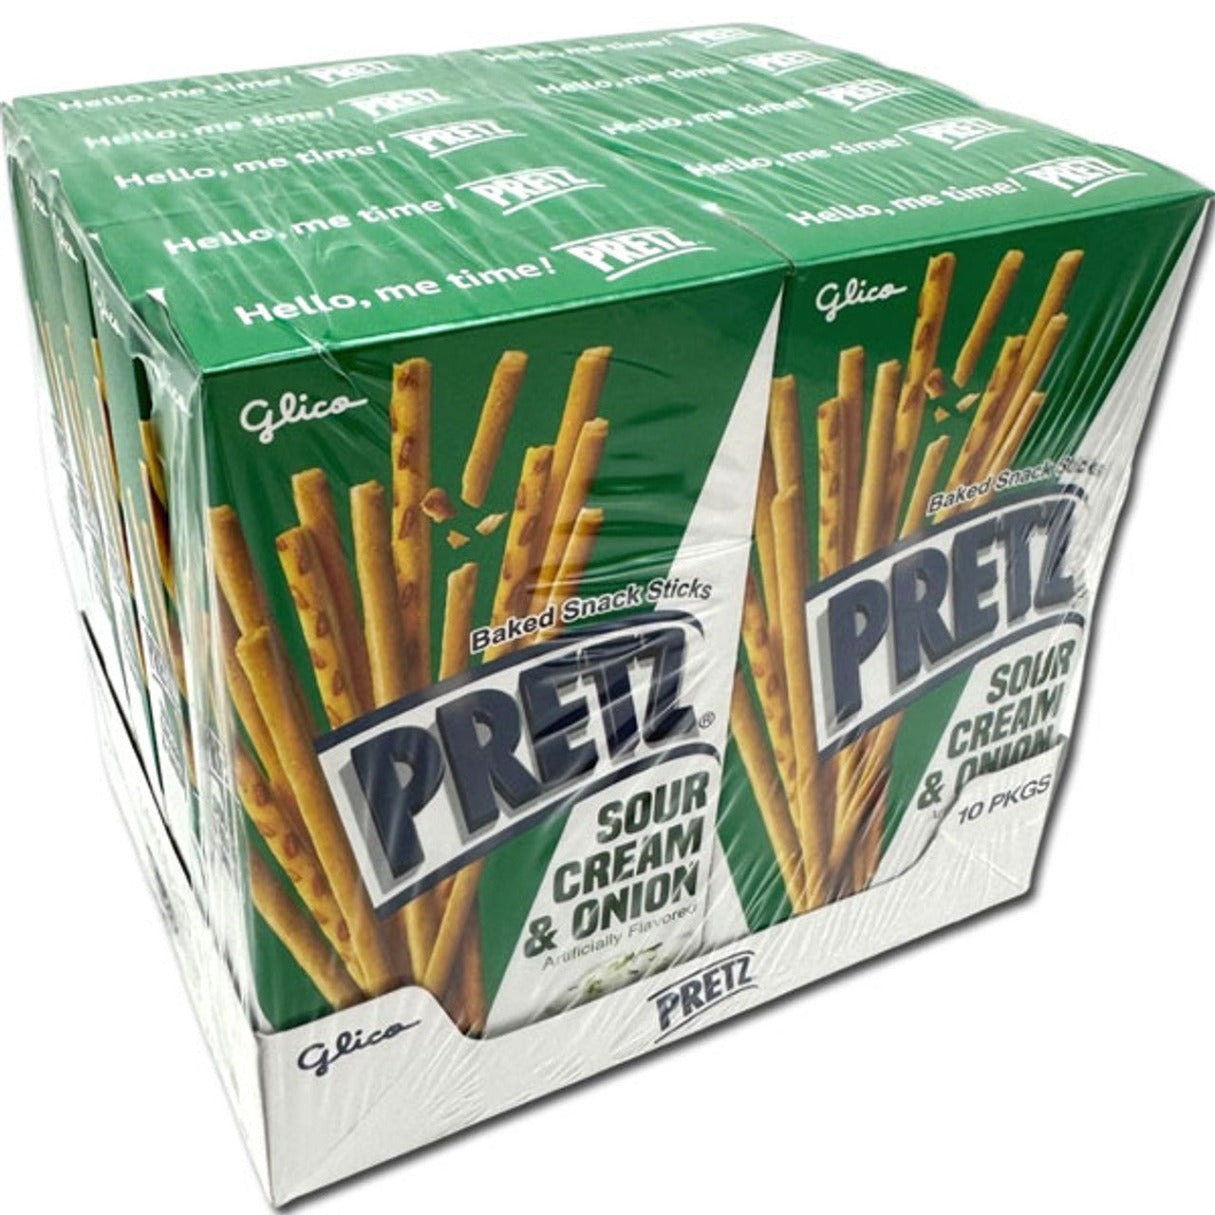 Glico Pretz Sour Cream & Onion Baked Snack Sticks 1.09oz - 10ct